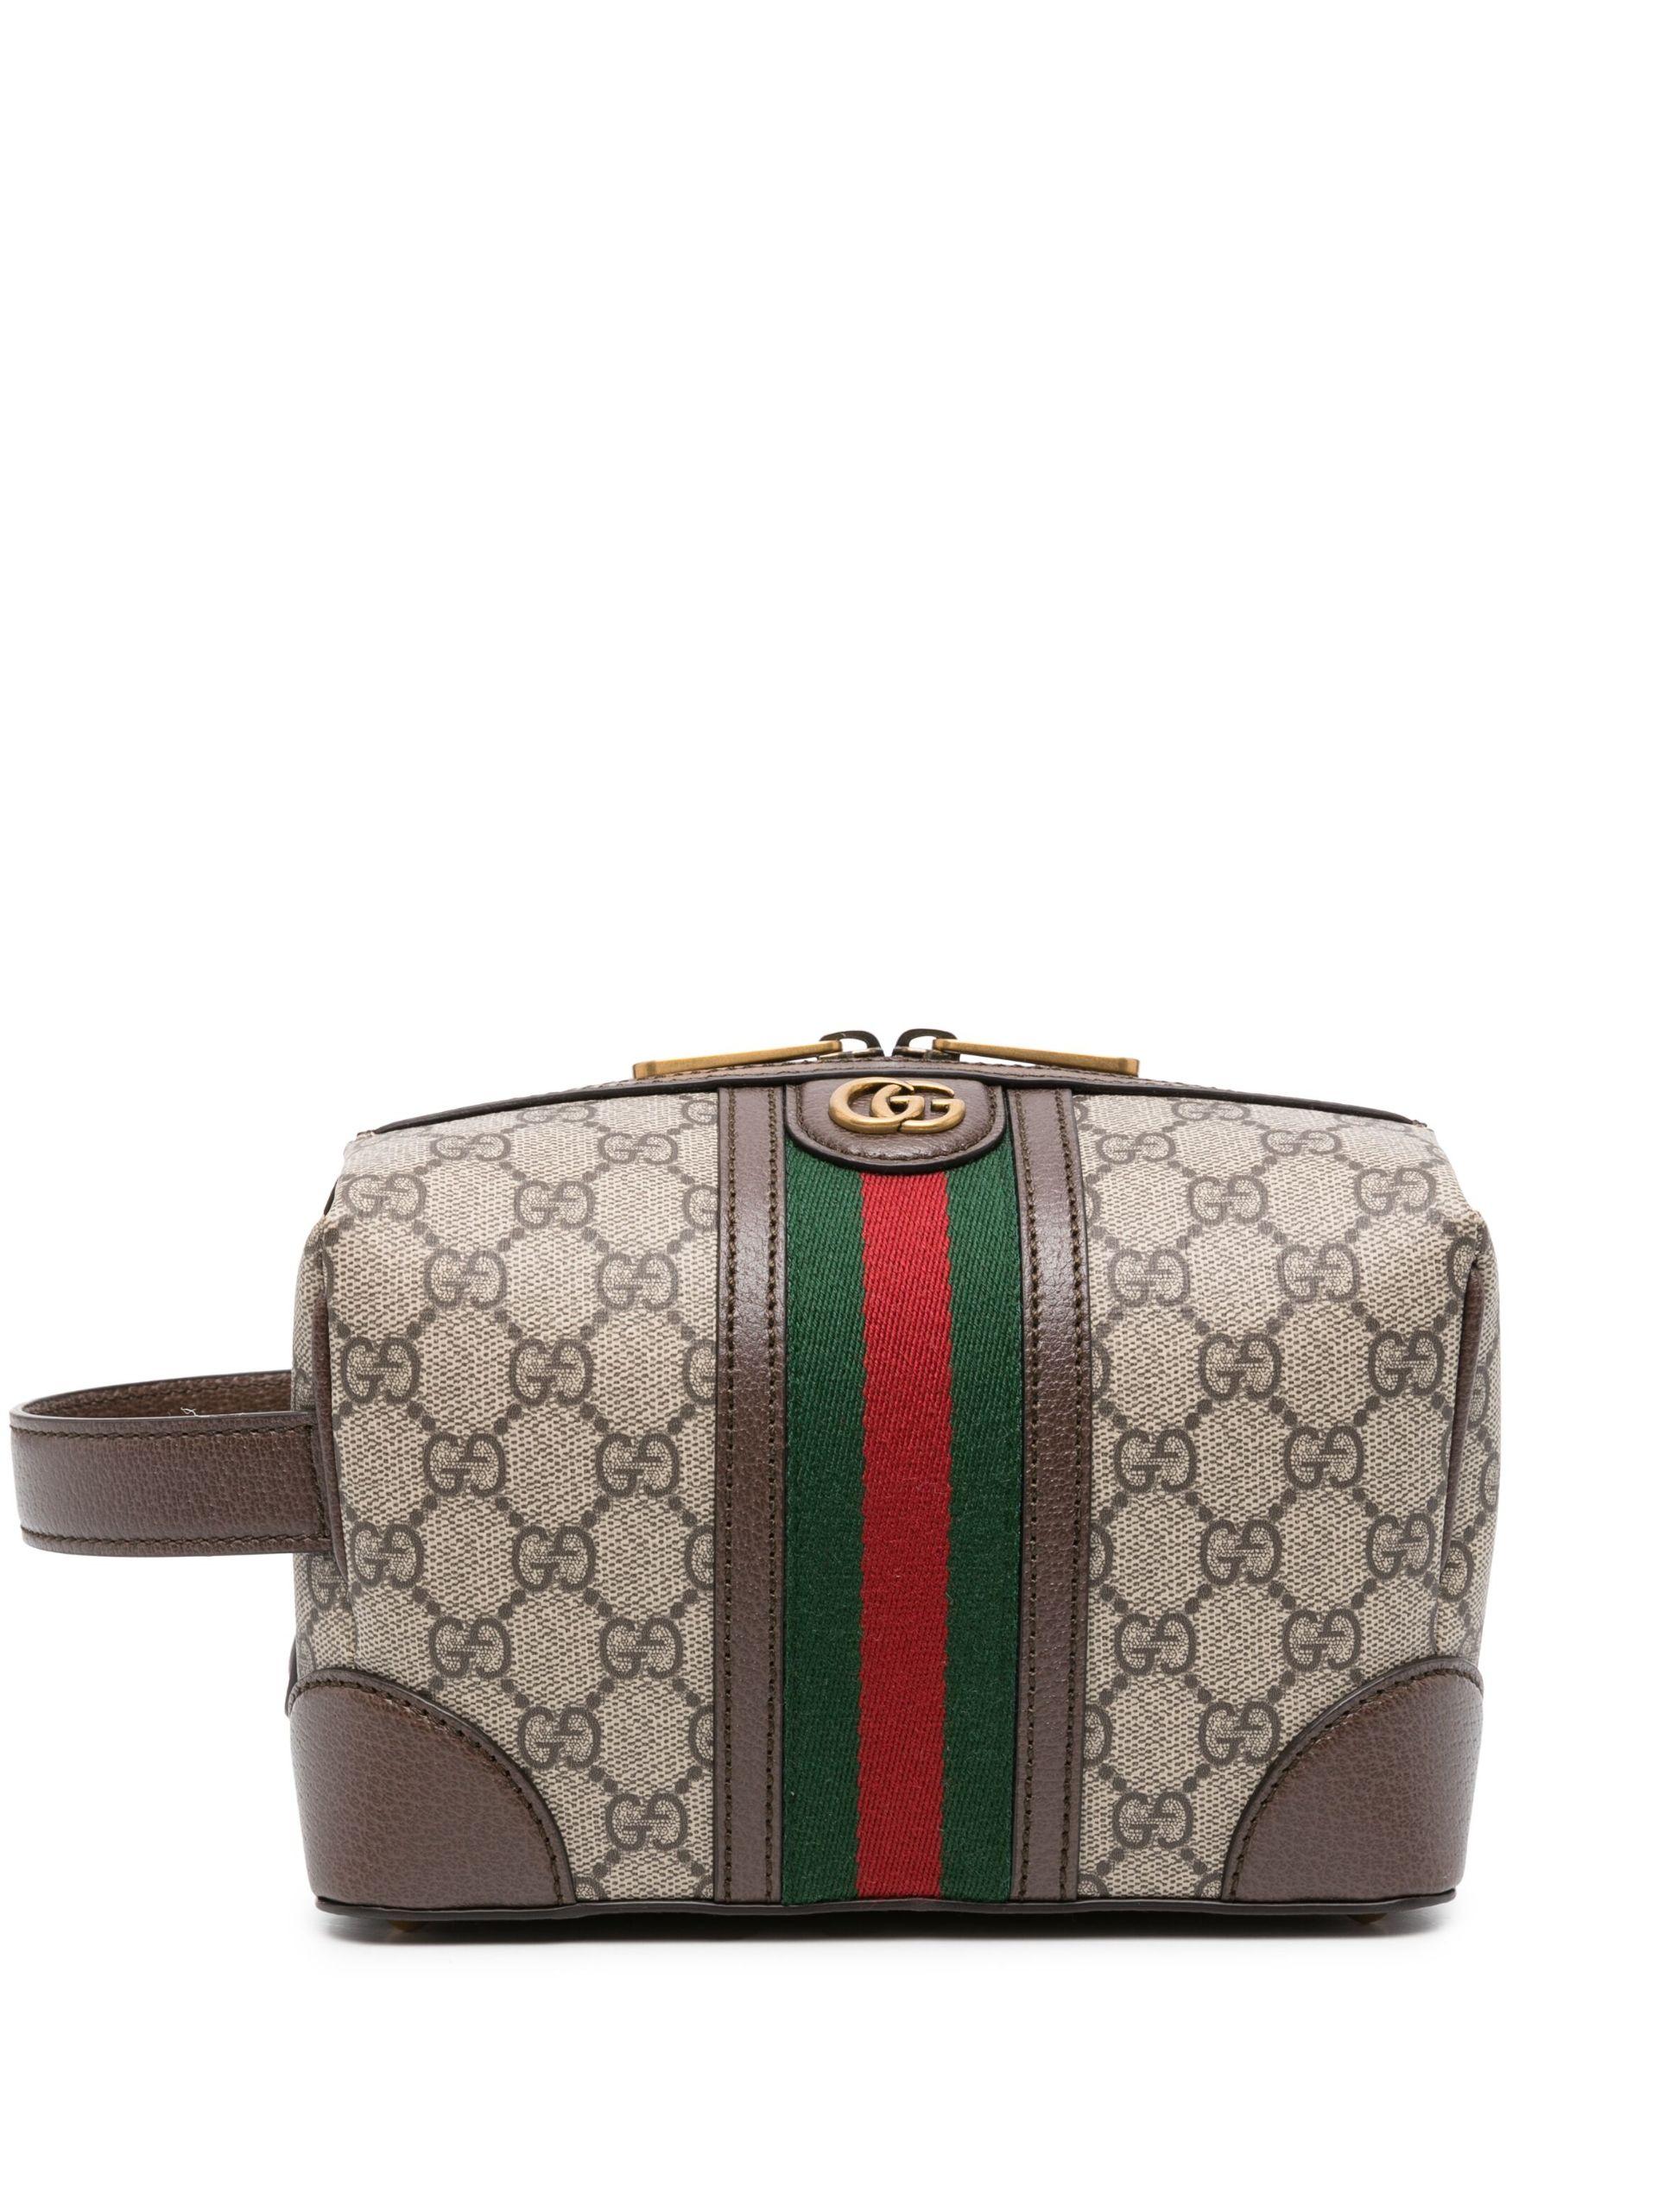 Neutral GG-Supreme mini canvas and leather cross-body bag, Gucci